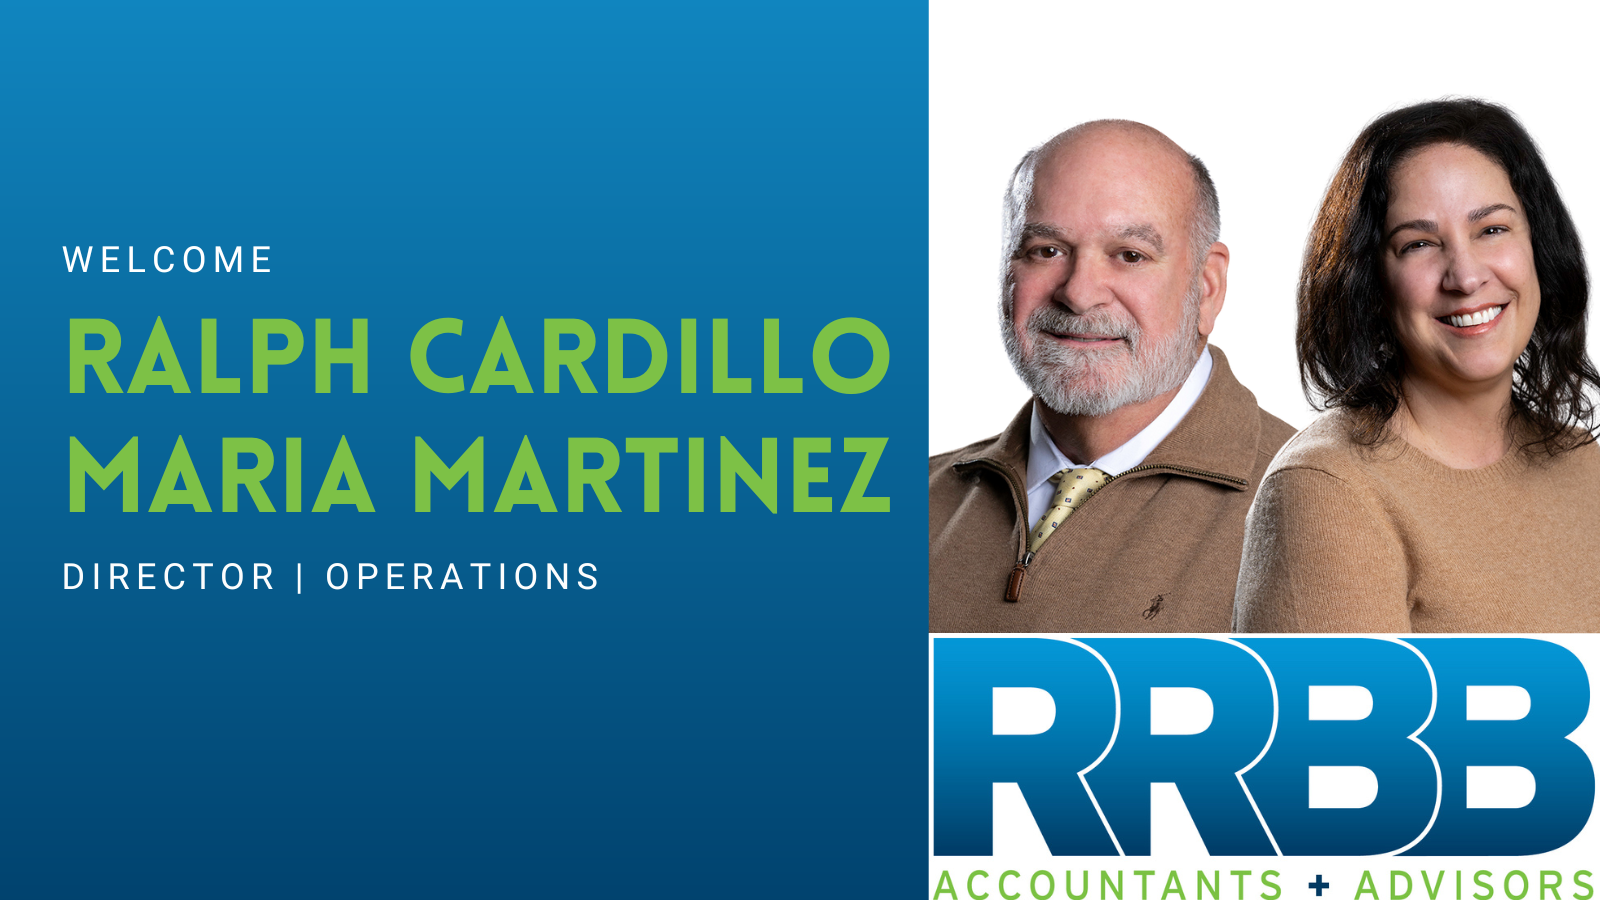 Cardillo & Co. Joins RRBB Advisors, LLC